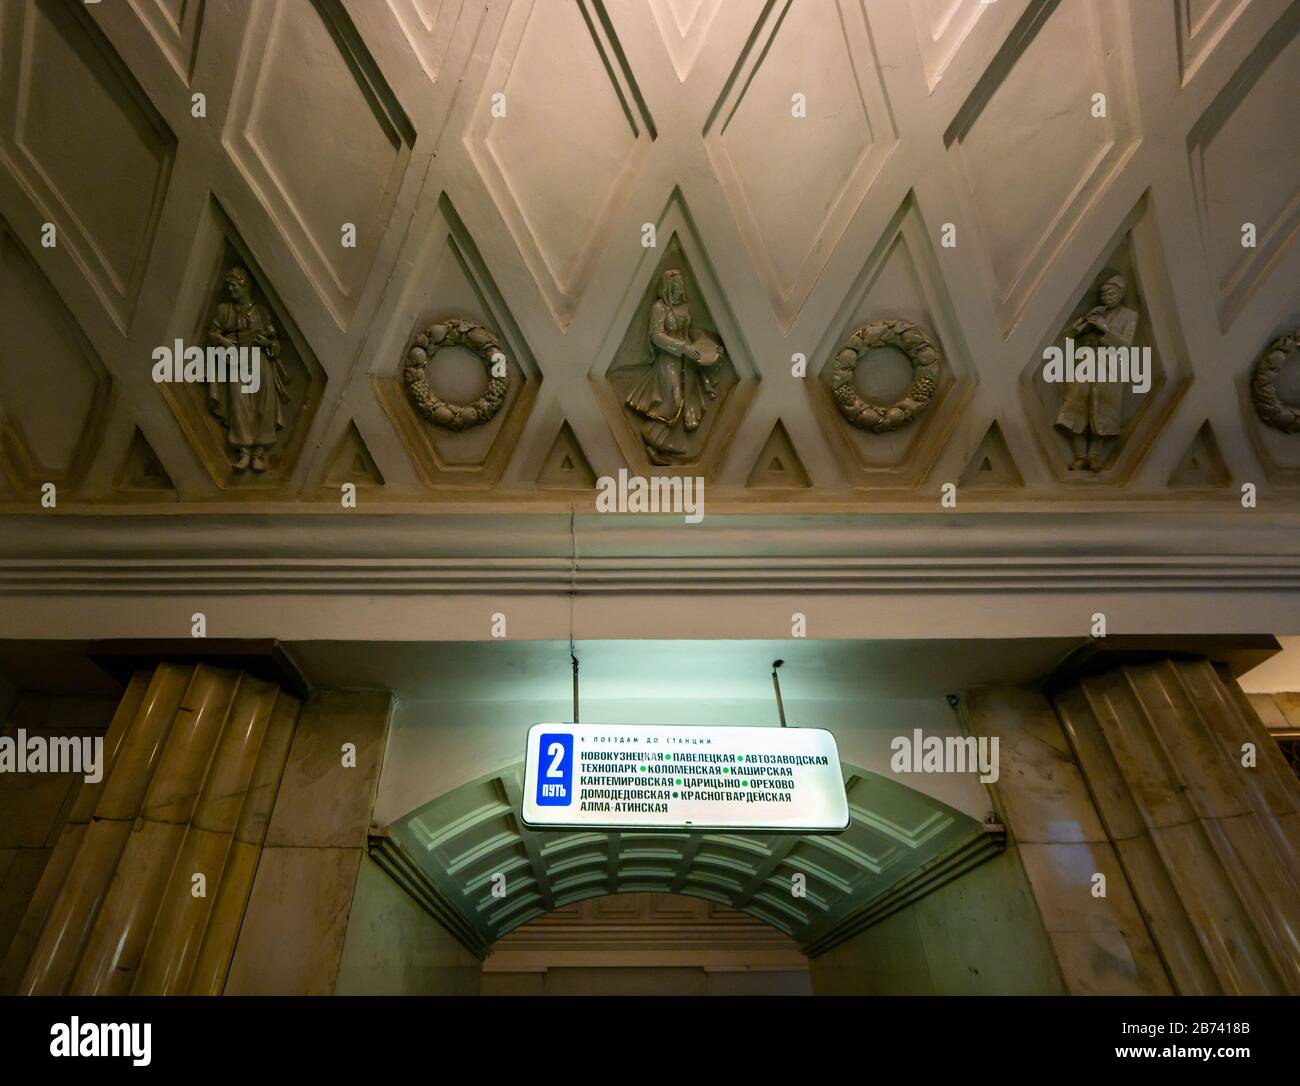 Teatralnaya Metro station veiling decoration, Moscow underground or subway, Russian Federation Stock Photo